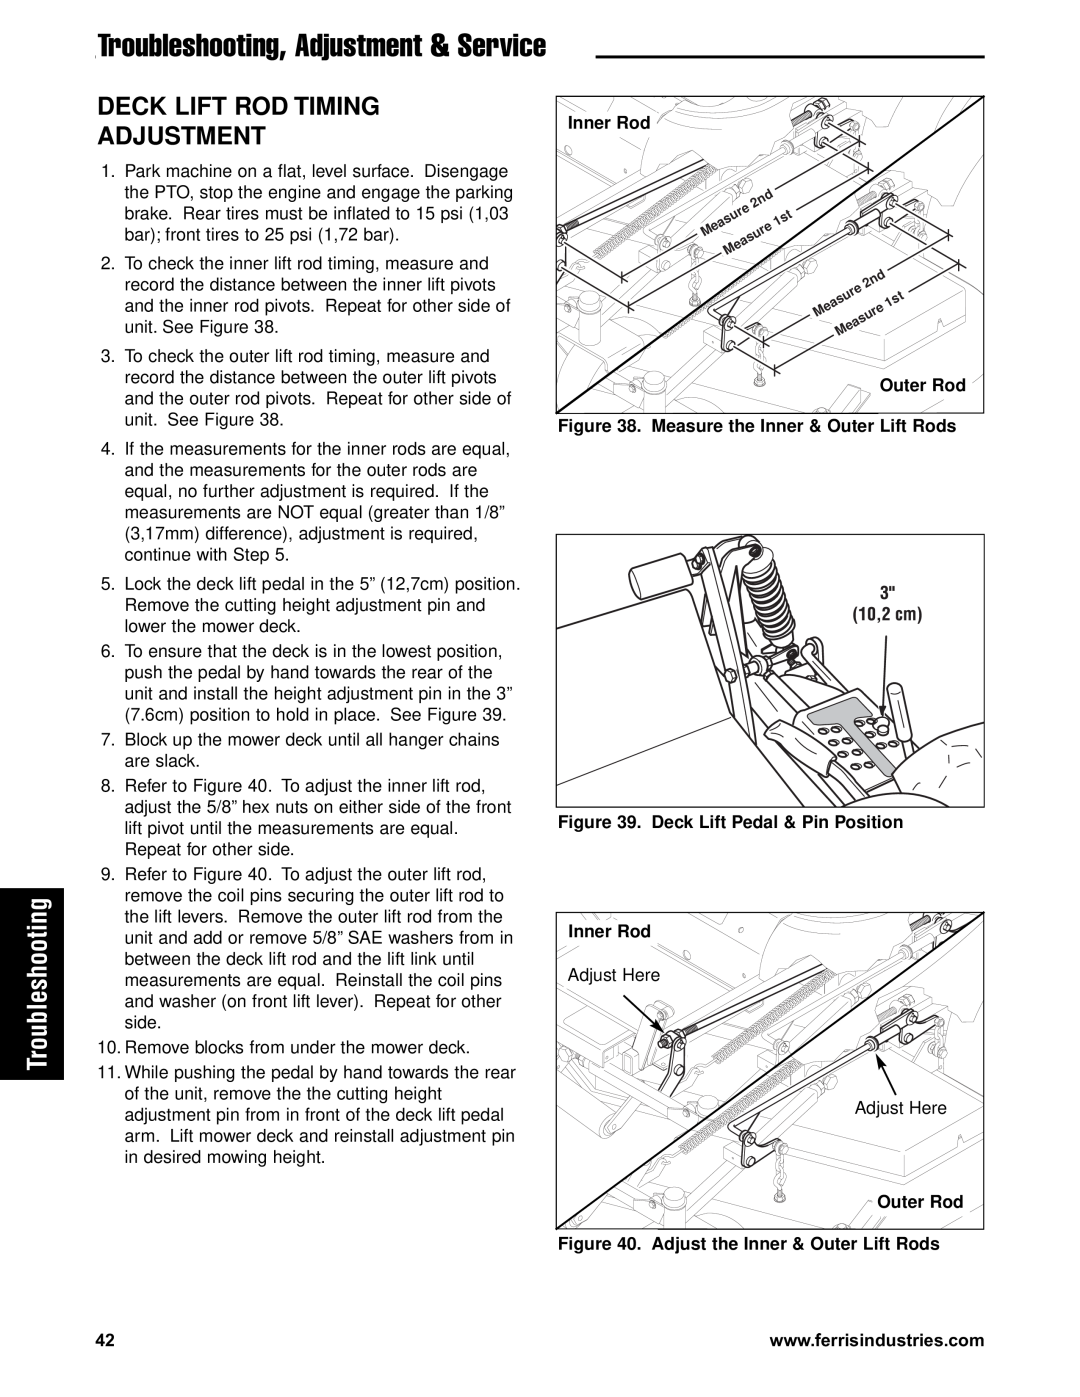 Briggs & Stratton 5900716, 5901186 manual Deck Lift Rod Timing Adjustment, Troubleshooting, Adjustment & Service, Inner Rod 